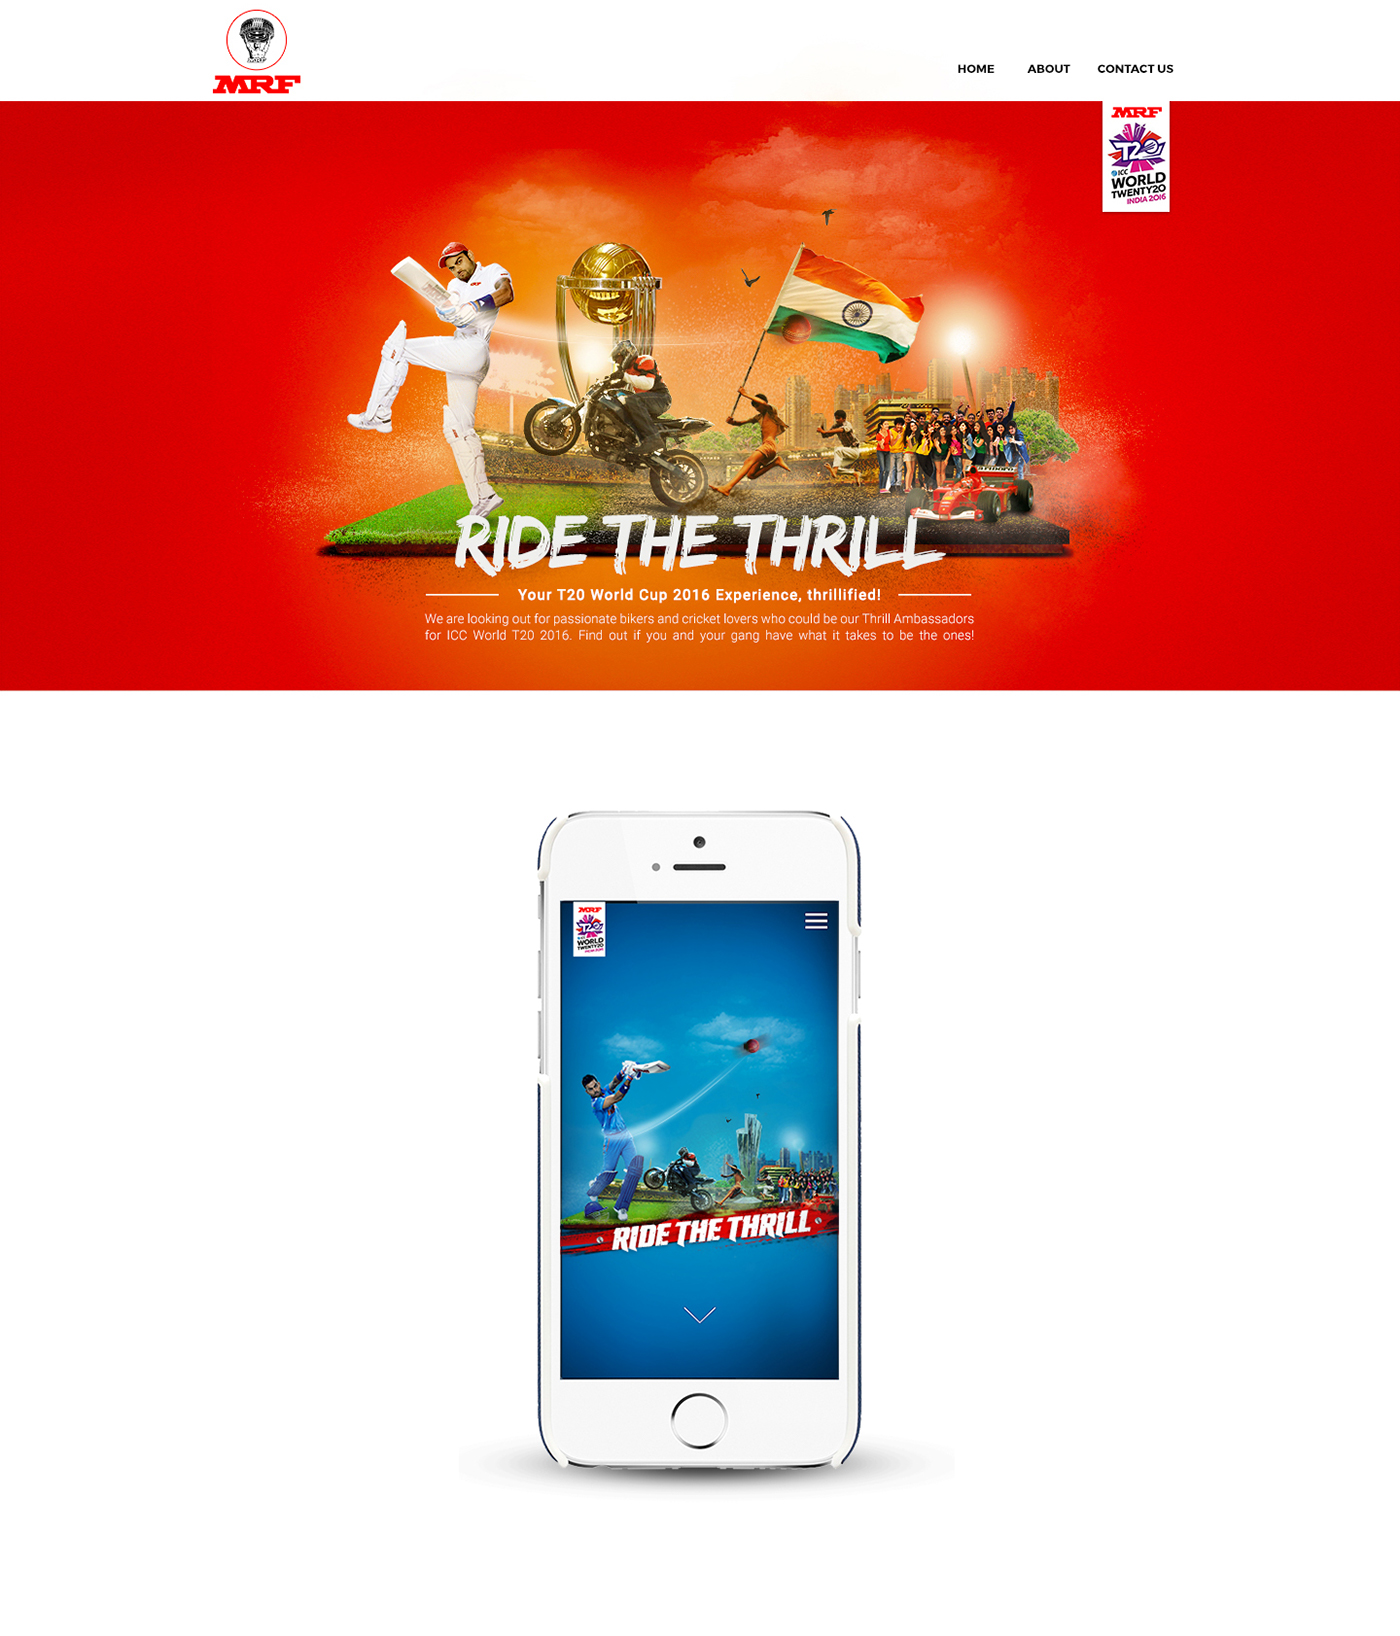 sports virat kohli  MRF T20 World Cup Cricket religion follow journey Thrill ride key visual sponsor Website Design Mobile app Responsive